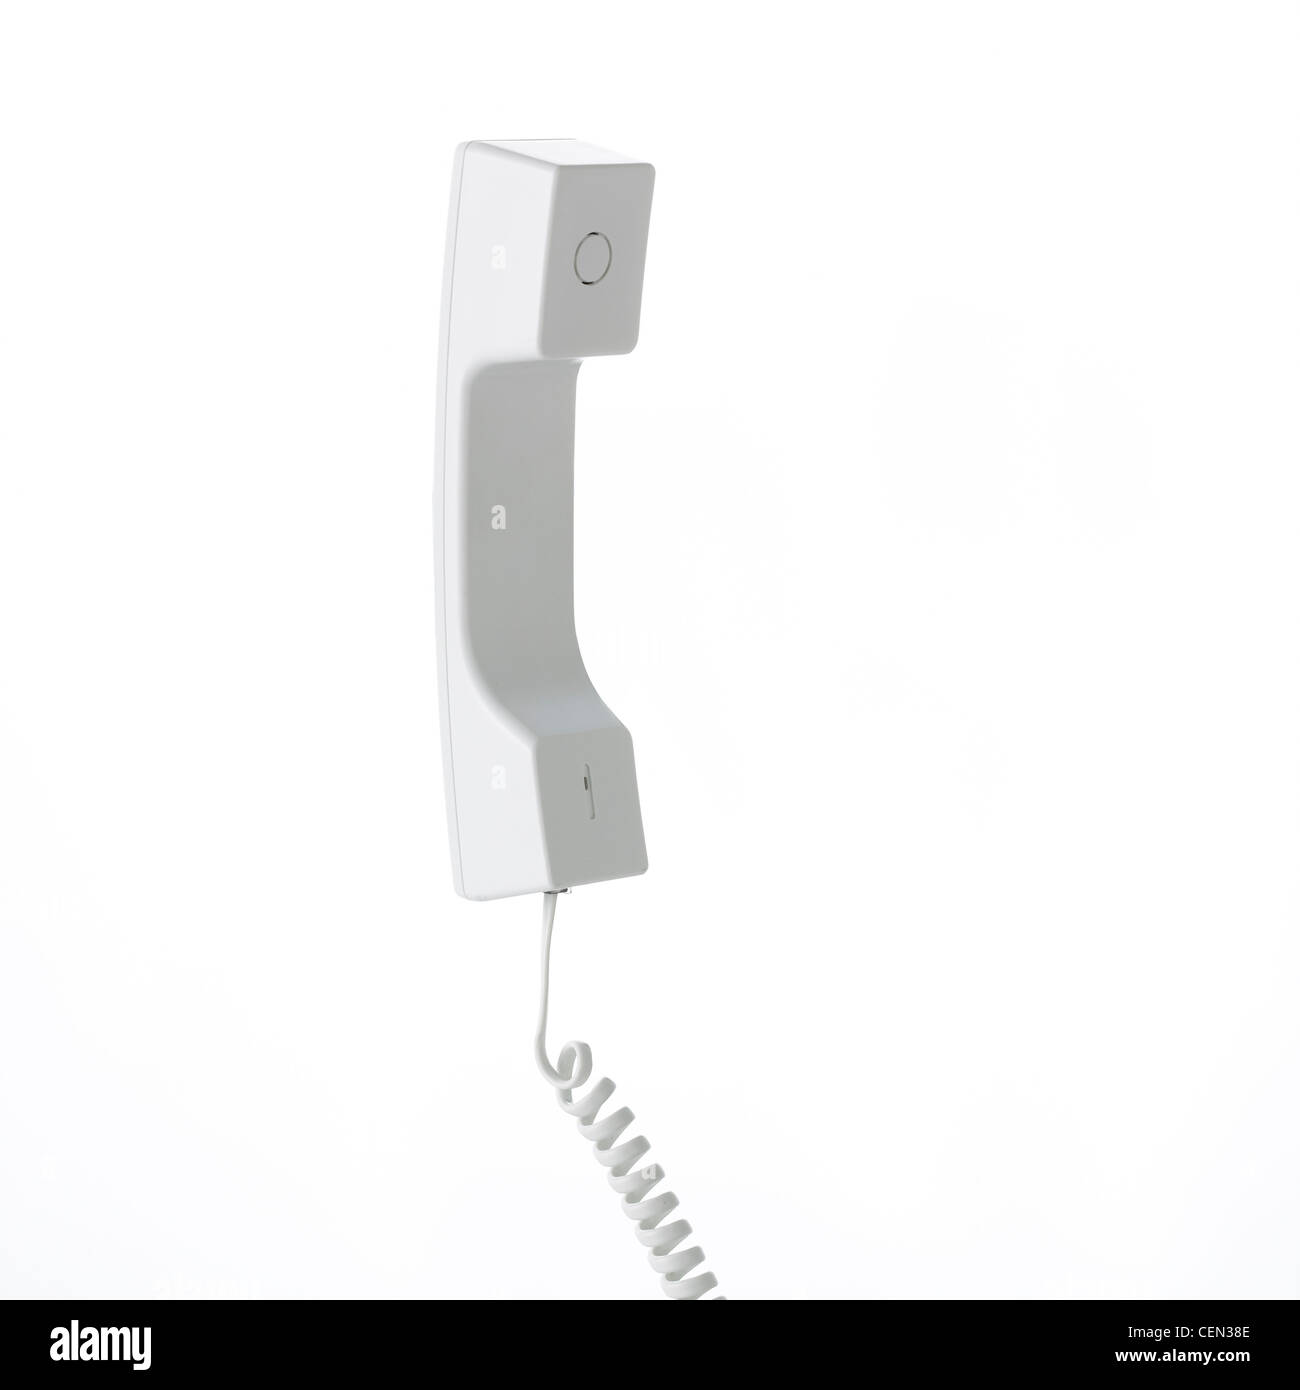 Handset of a landline telephone Stock Photo